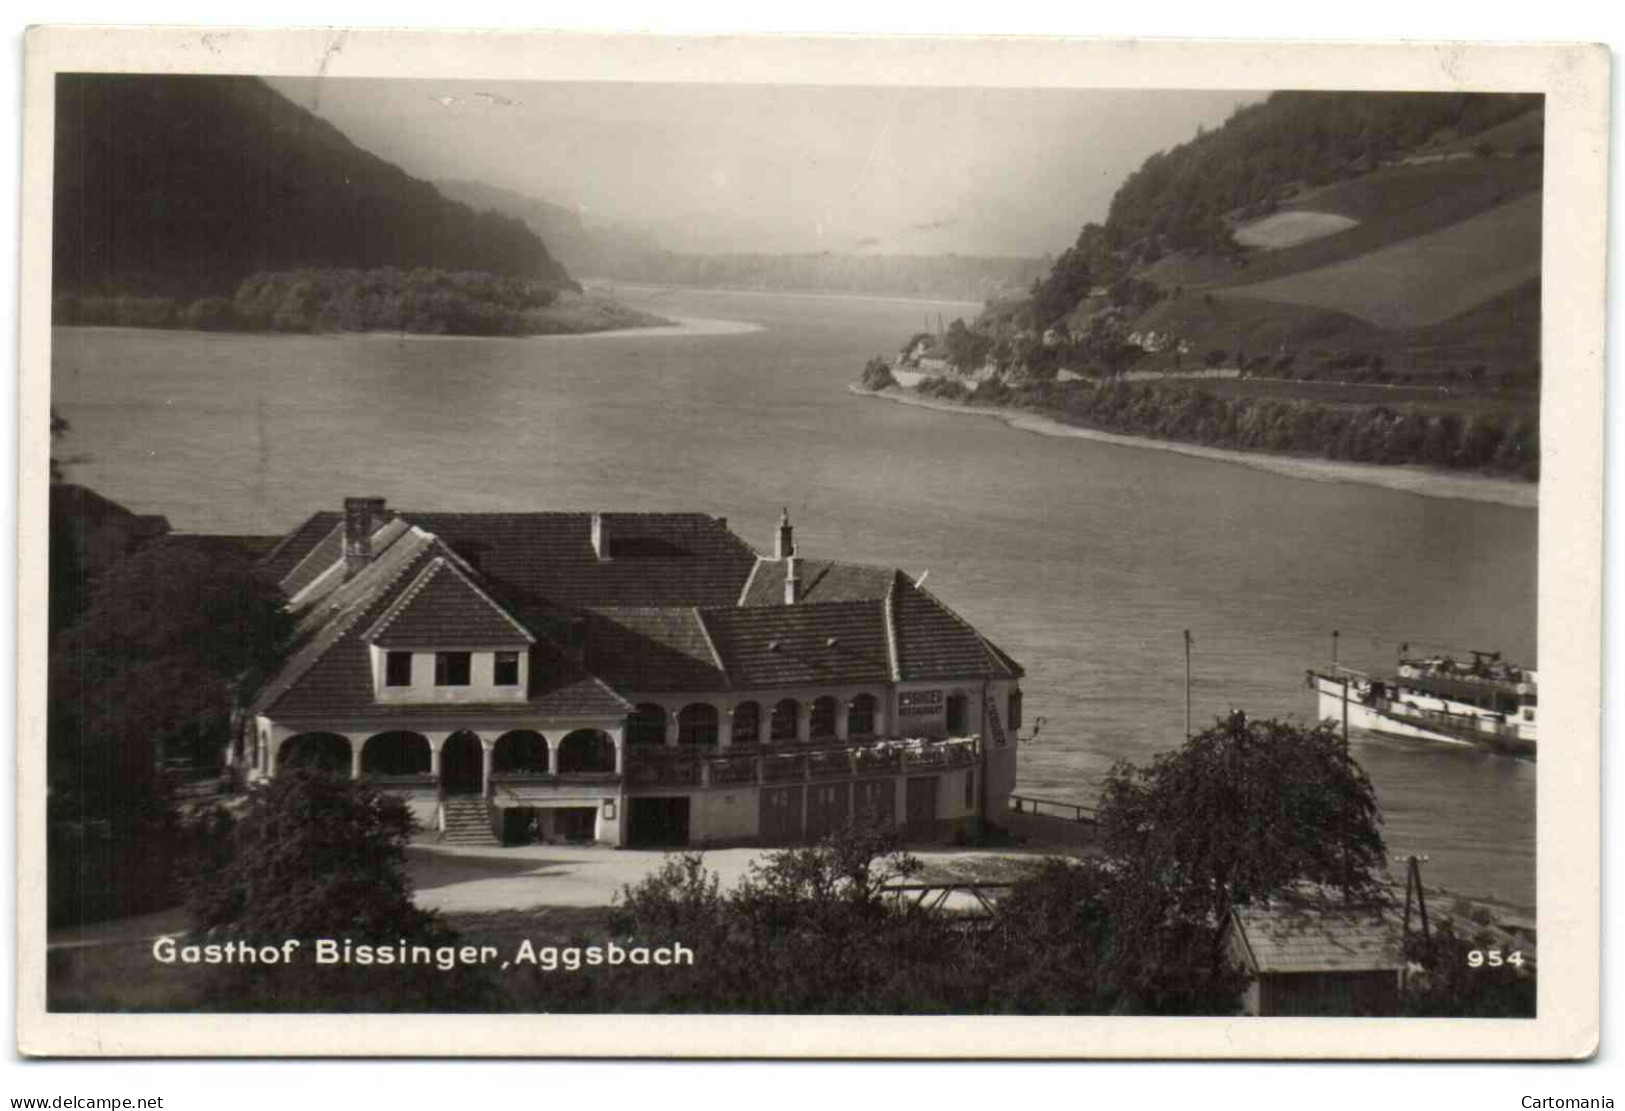 Gasthof Bissinger - Aggsbach - Krems An Der Donau